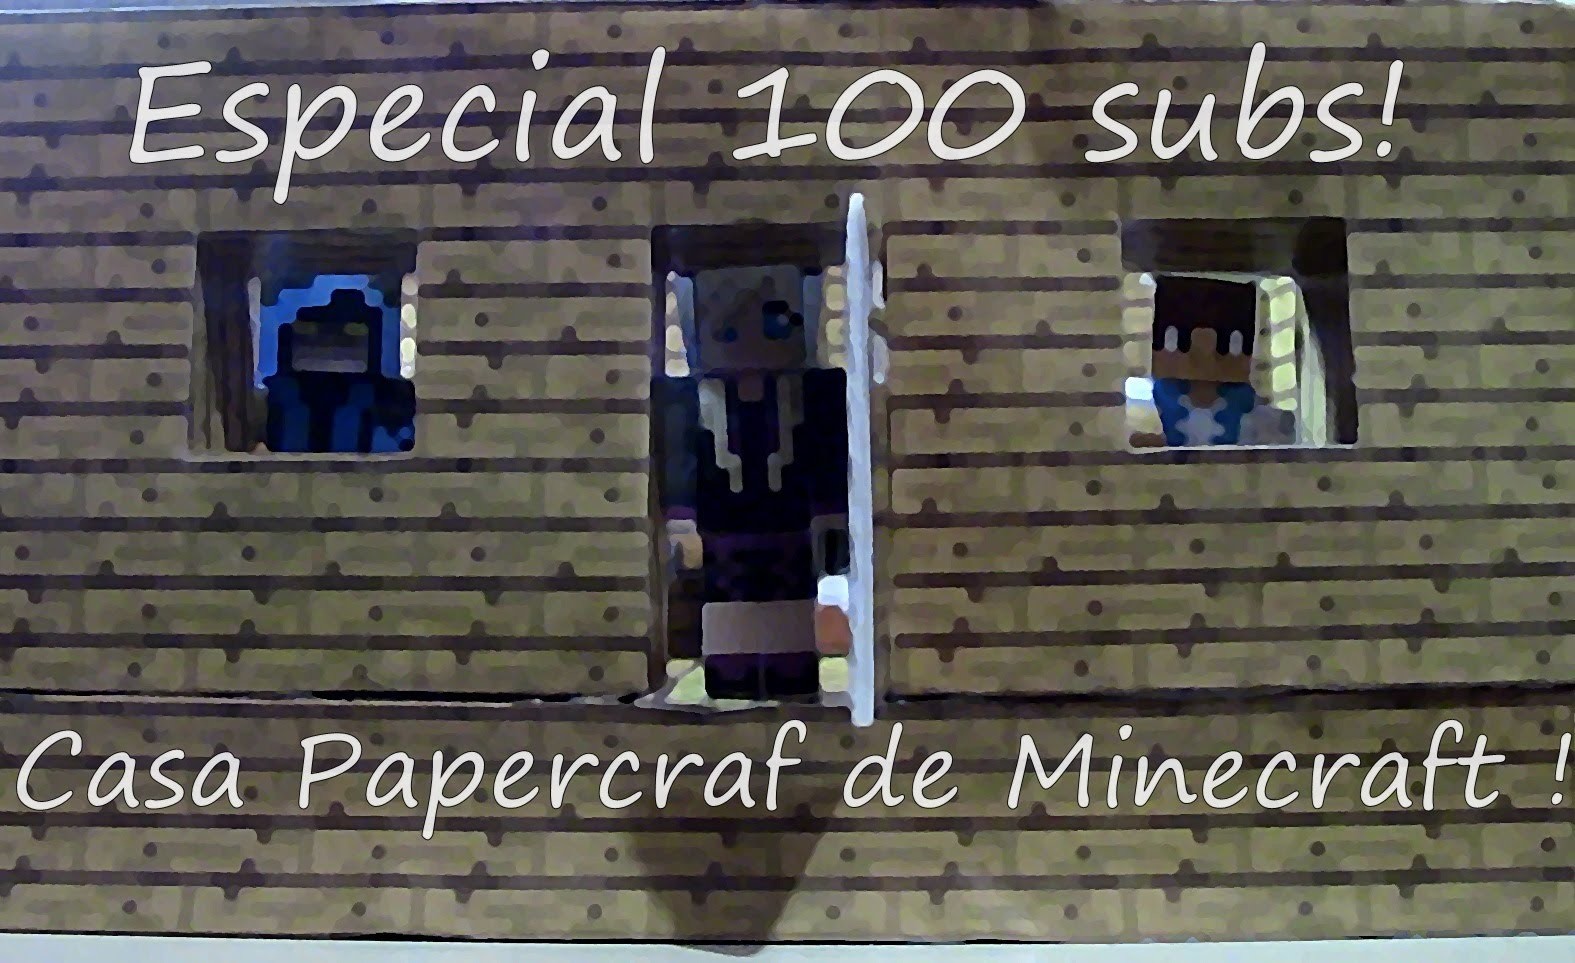 Especial 100 Casa de minececraft papercraft !